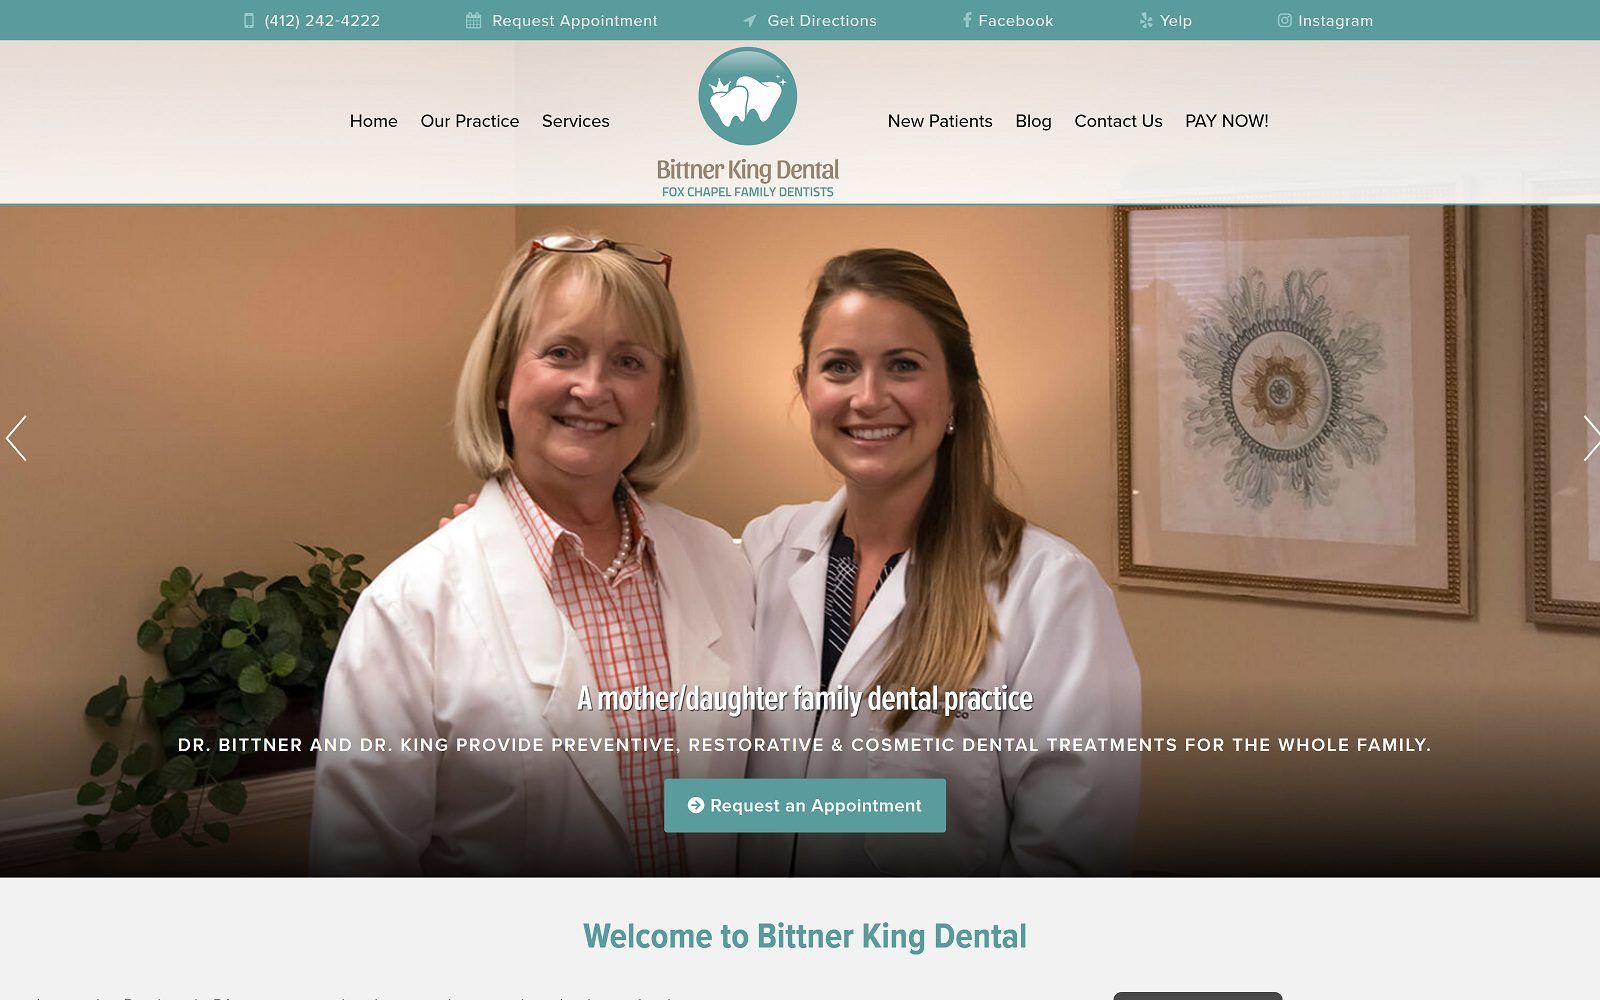 The screenshot of bittner king dental - fox chapel family dentists website